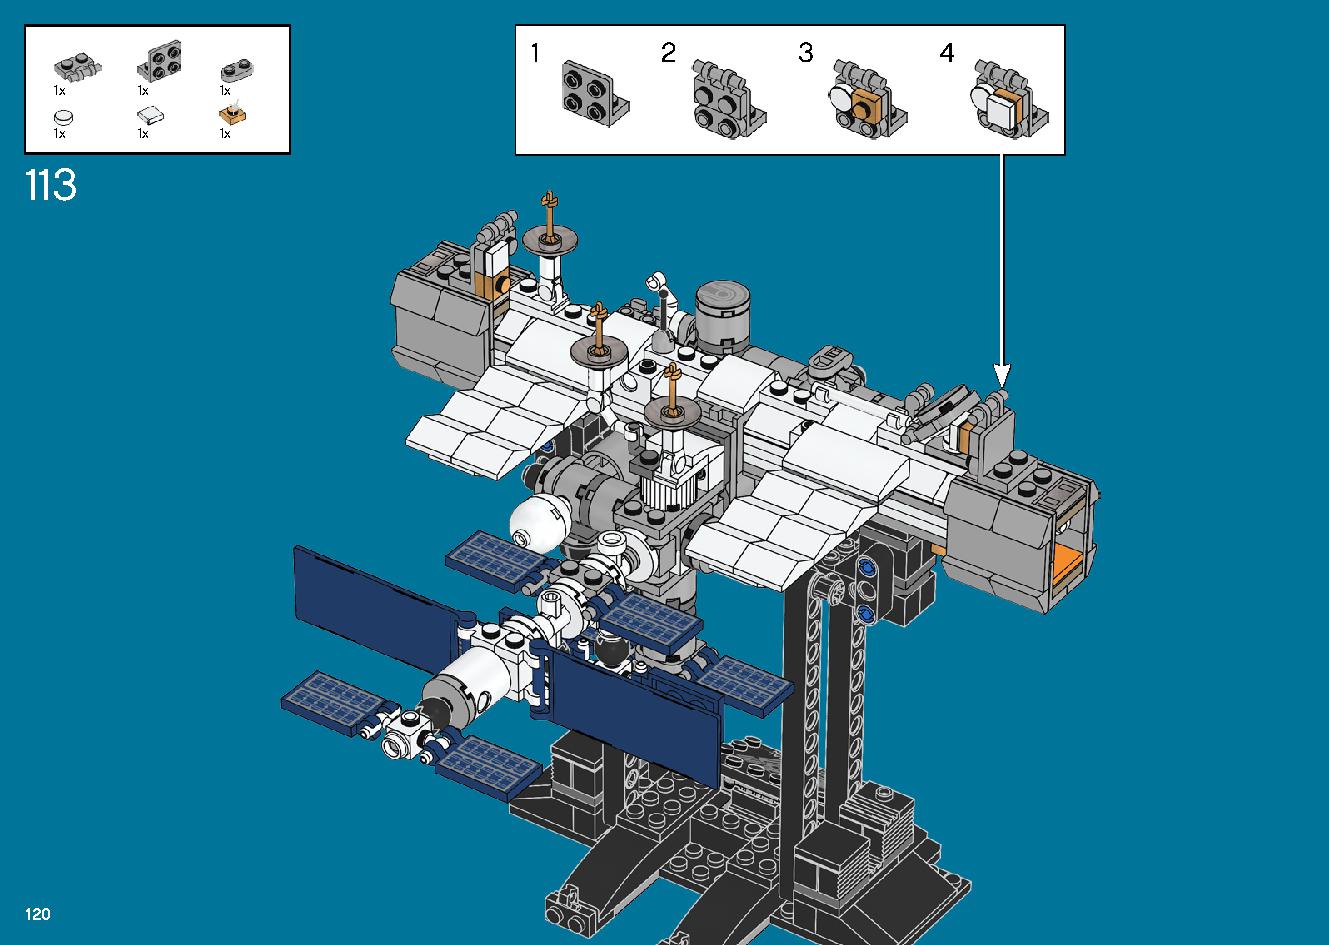 International Space Station 21321 レゴの商品情報 レゴの説明書・組立方法 120 page